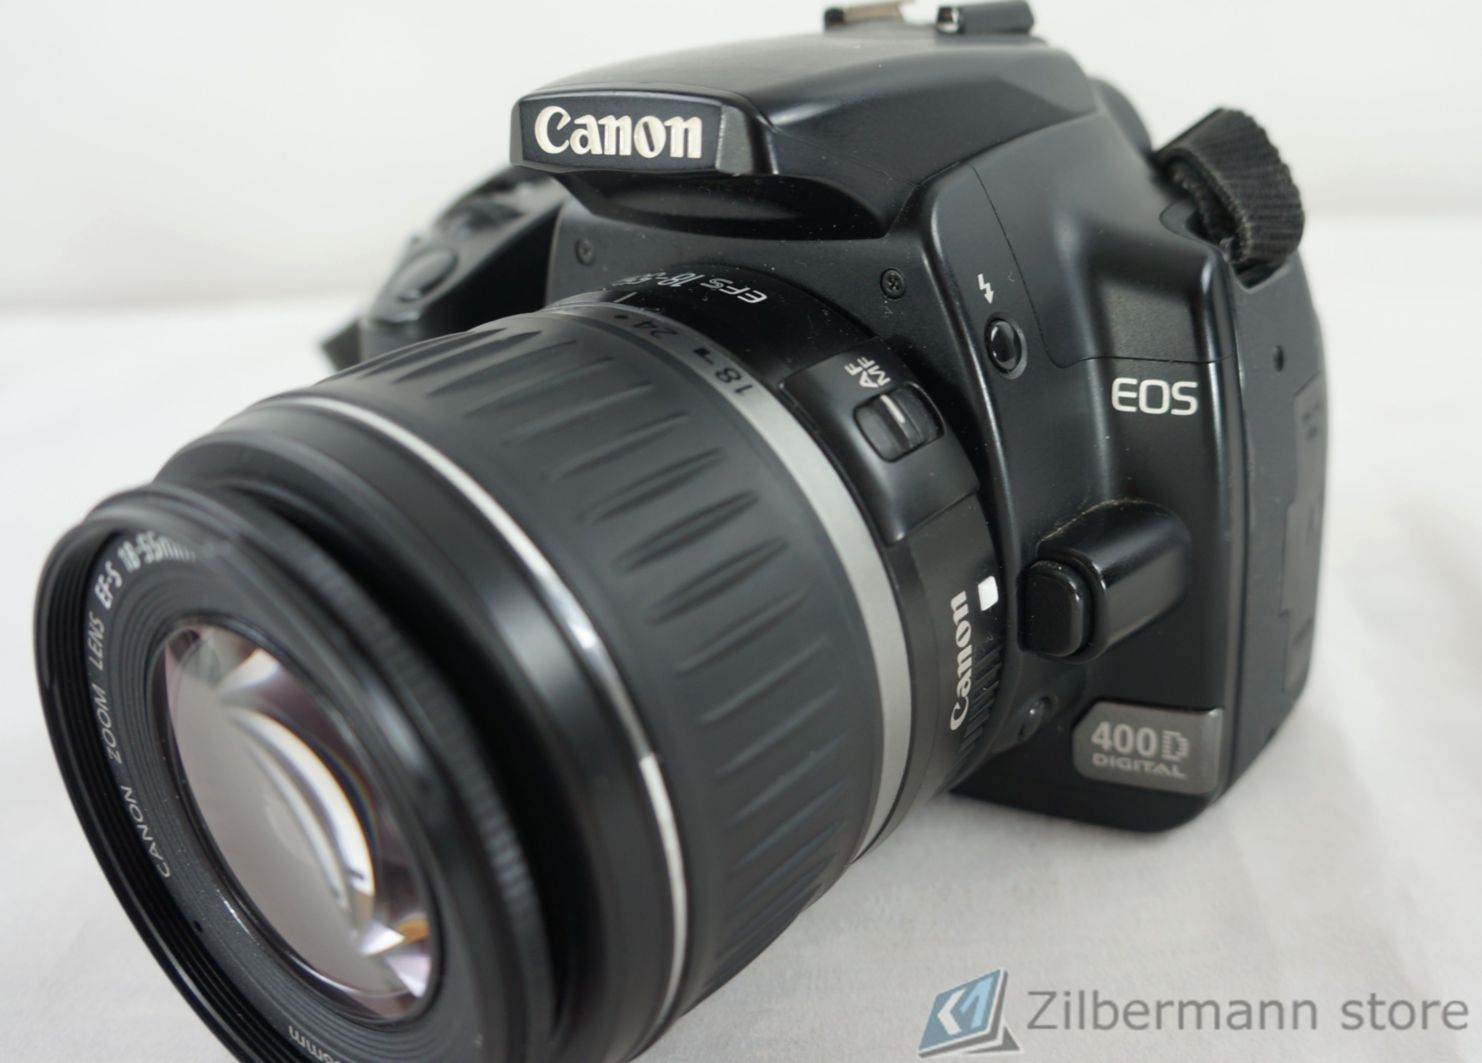 Canon_EOS_400D_Digitalkamera_DSLR_Spiegelreflex_18x55mm_Objektiv__Griff_03